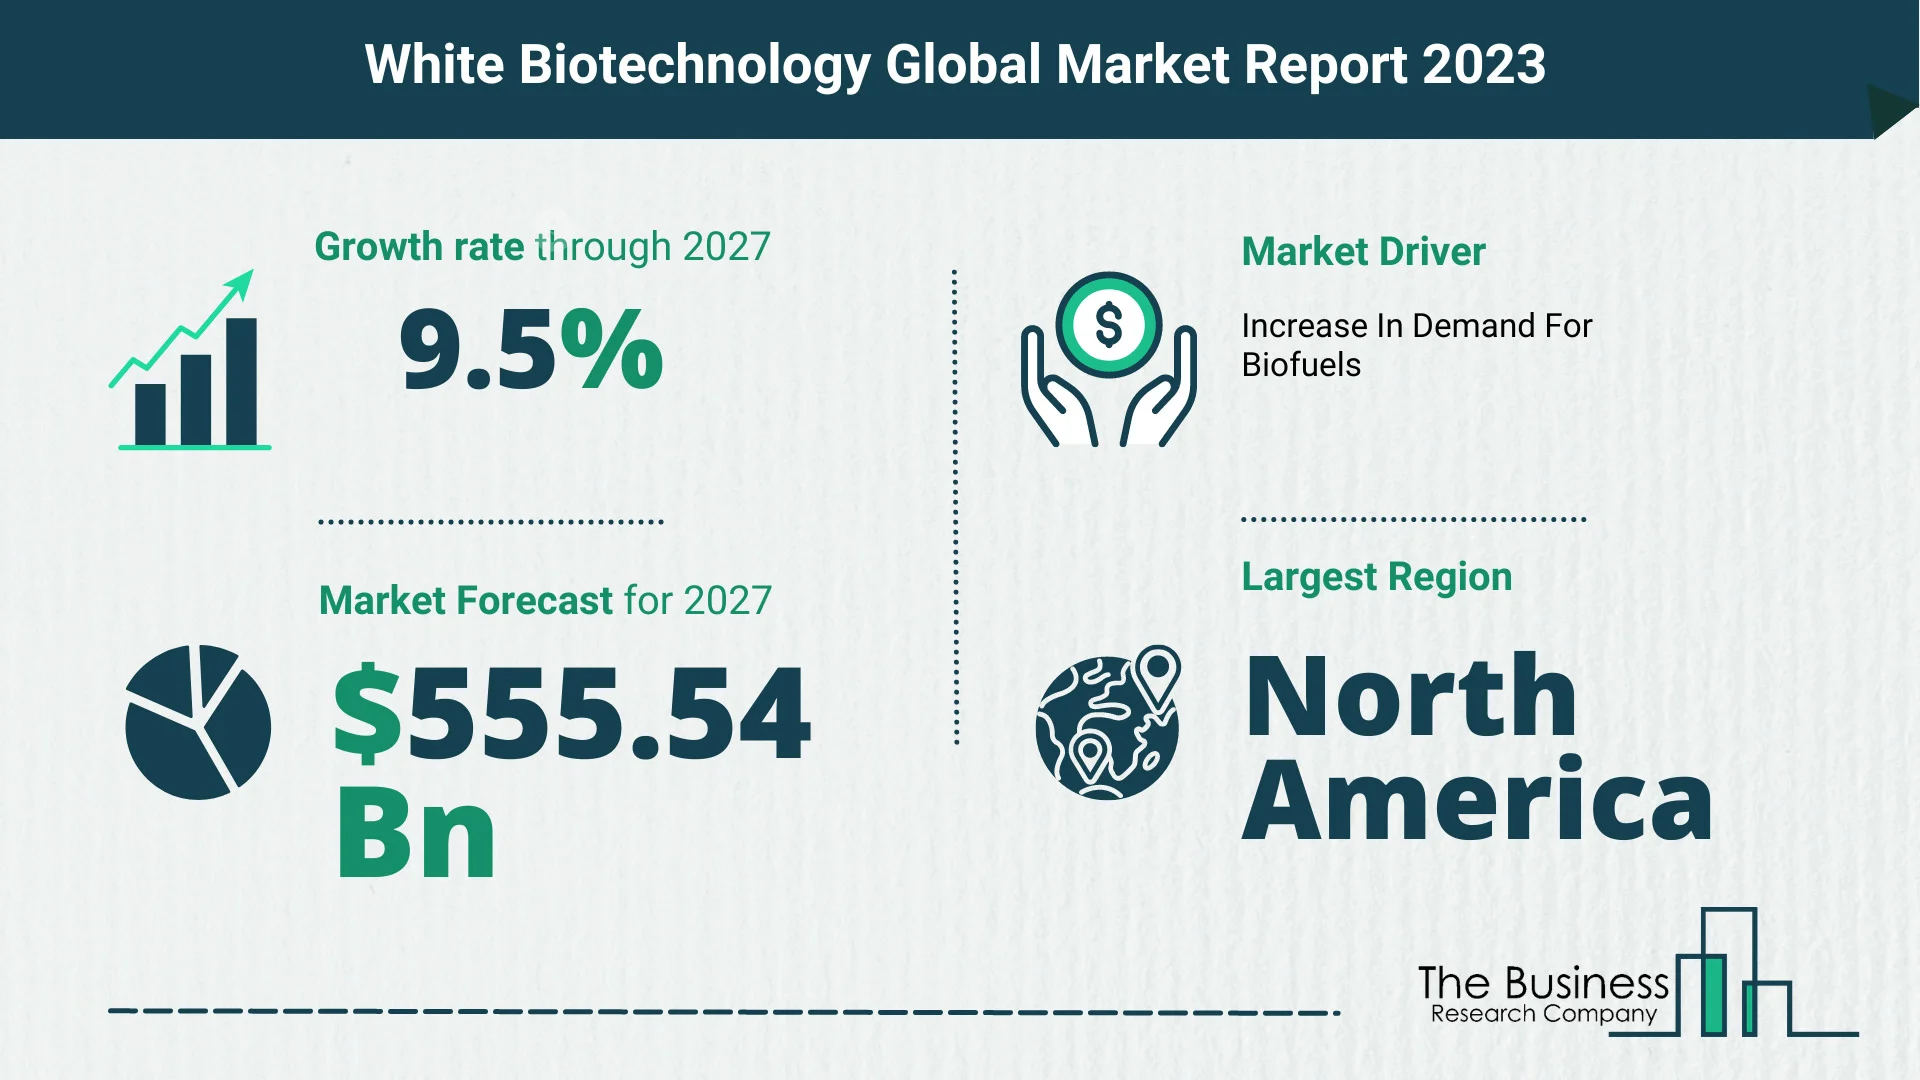 Global White Biotechnology Market Size